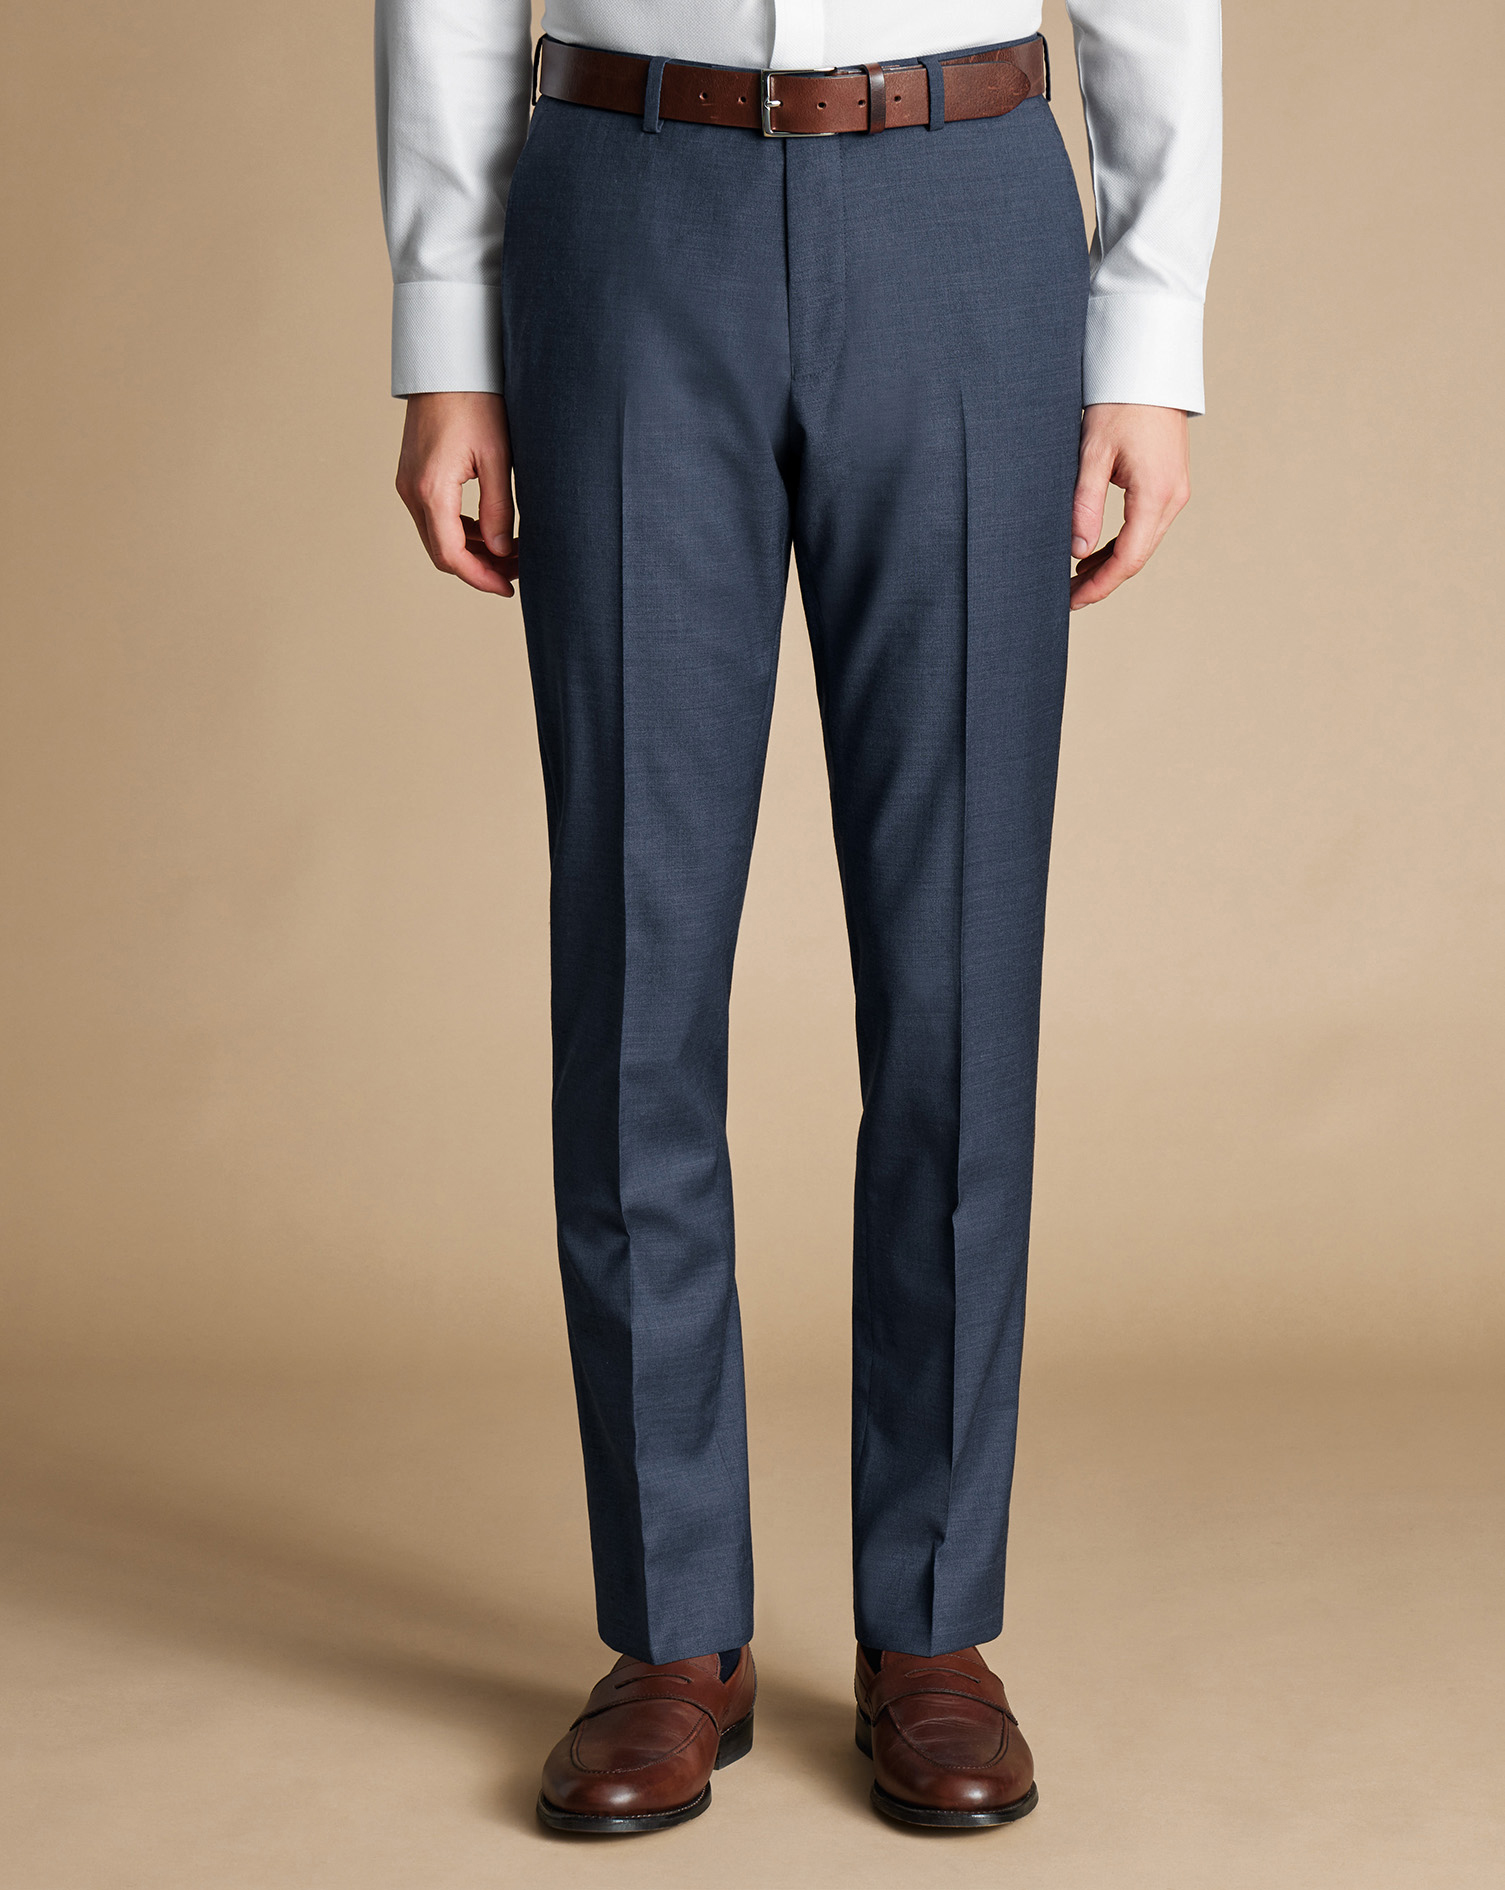 Men's Charles Tyrwhitt Italian Suit Trousers - Heather Blue Size 32/32
